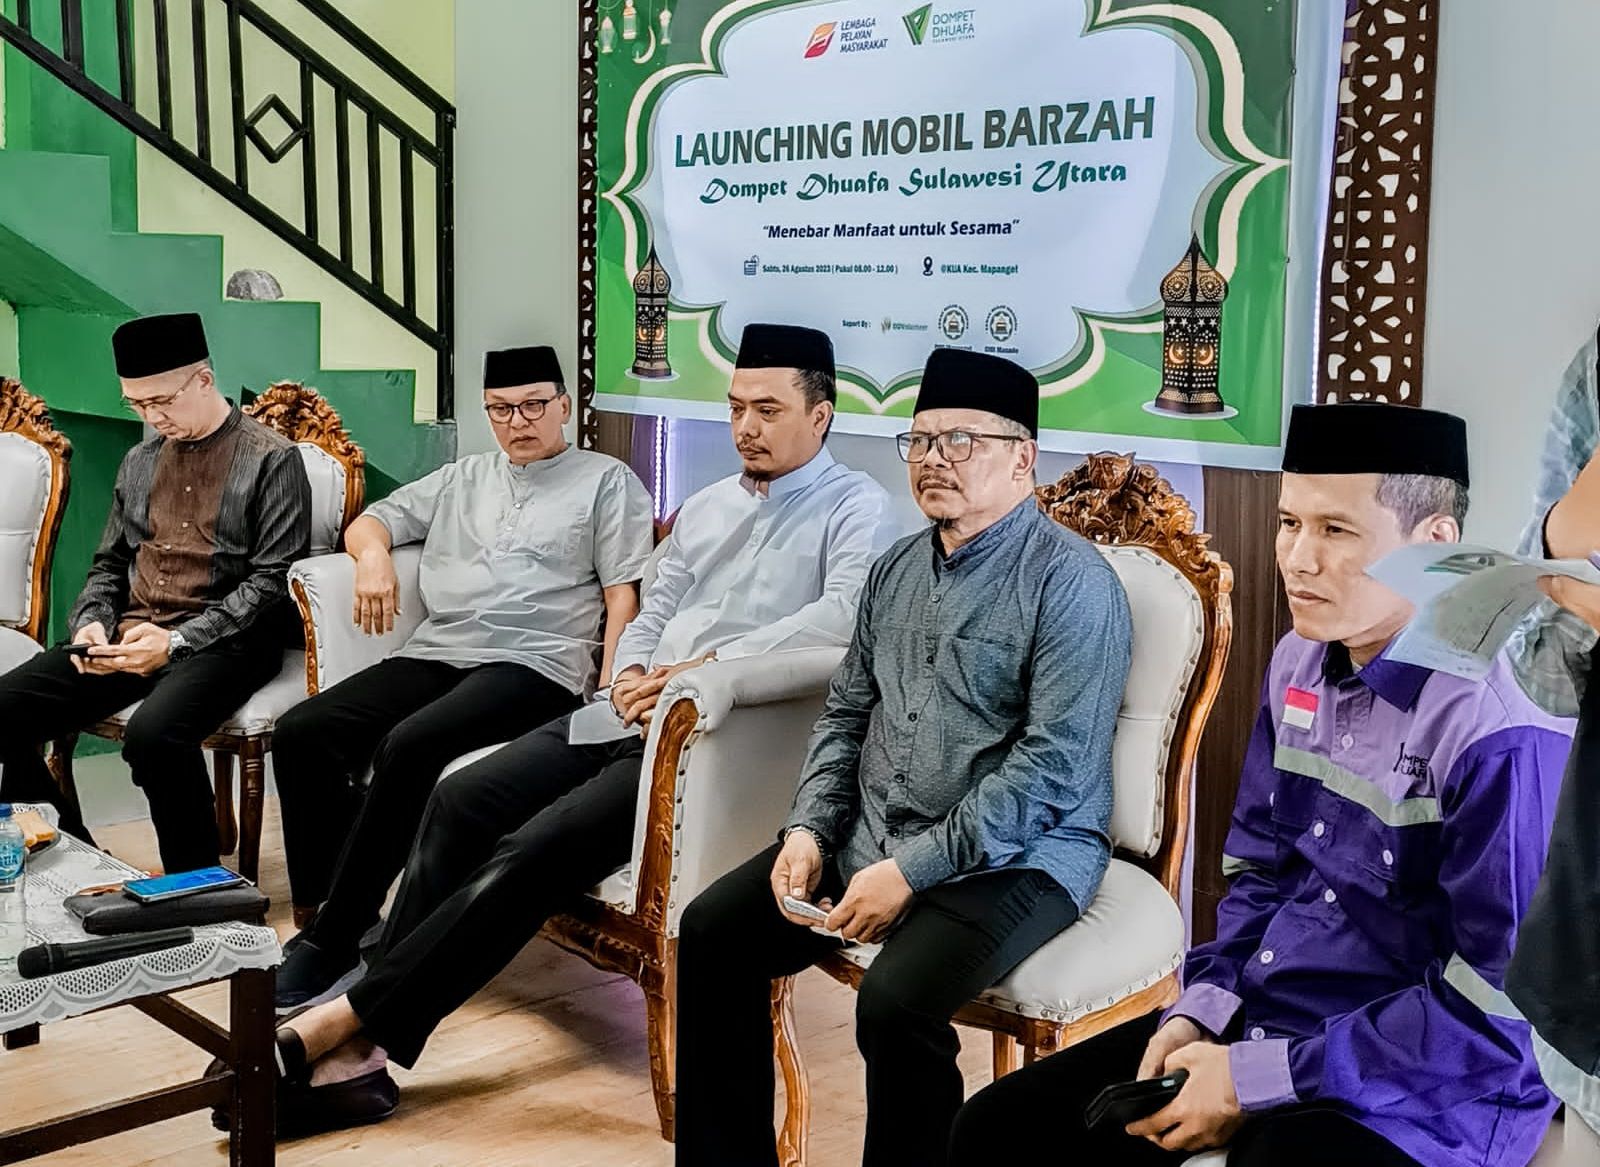 Proses peluncuran Mobil Barzah Dompet Dhuafa Sulawesi Utara